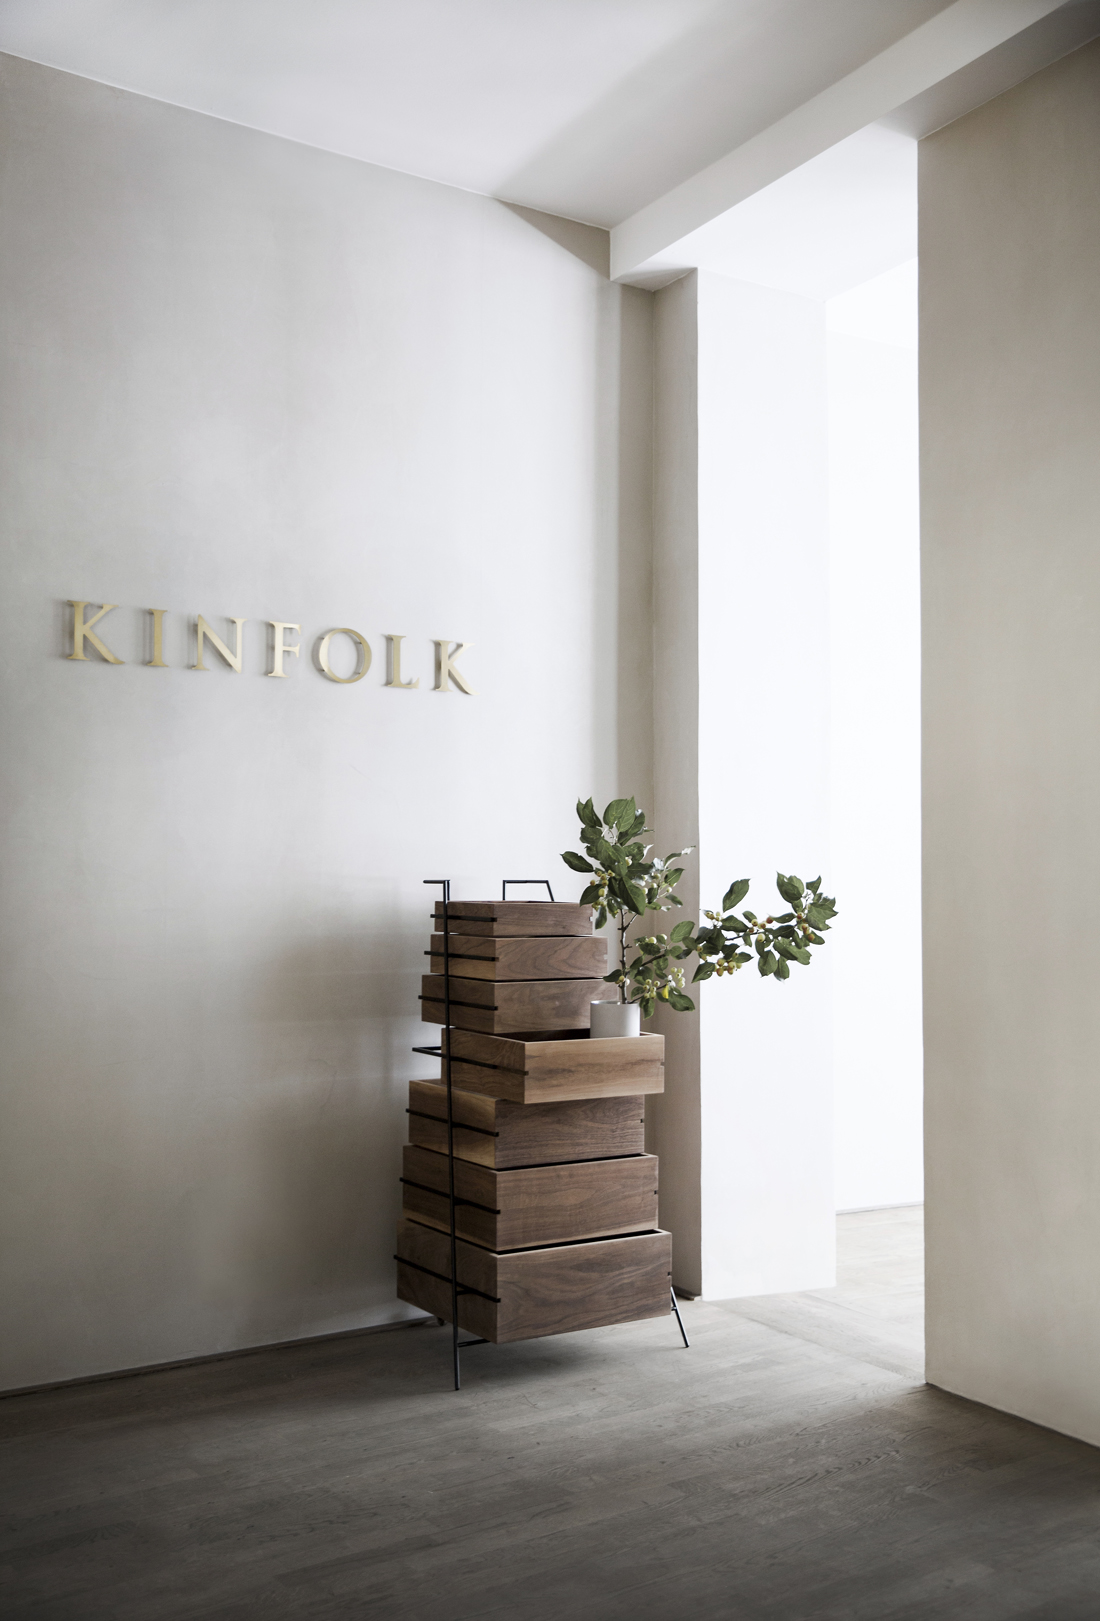 Kinfolk Office & Gallery